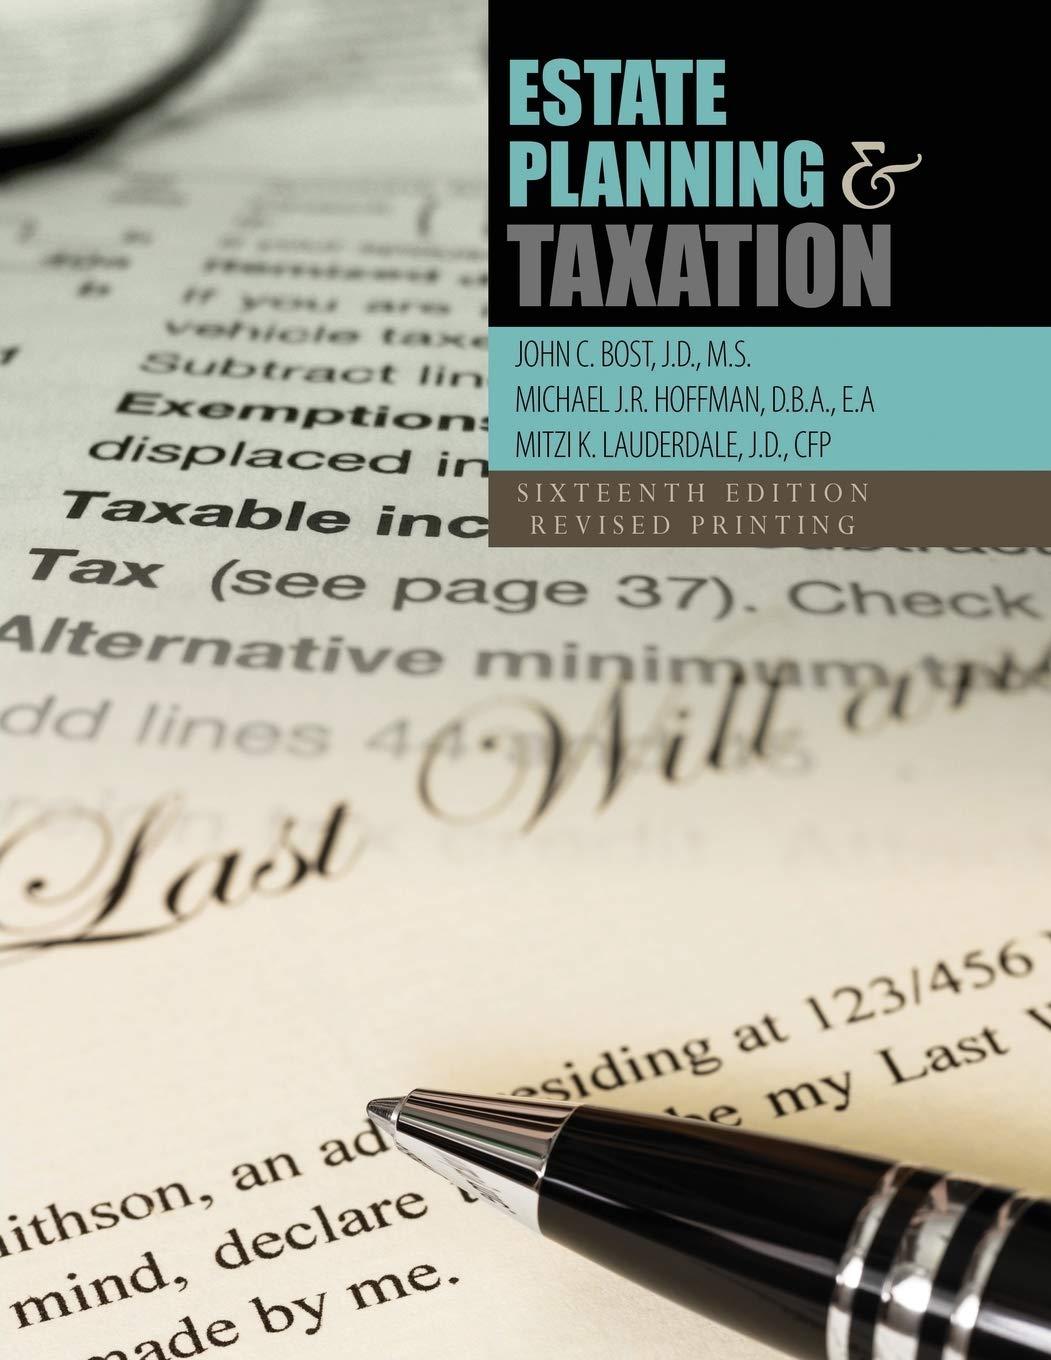 estate planning and taxation 16th edition john bost, nancy prestopino, michael j.r. hoffman, mitzi lauderdale